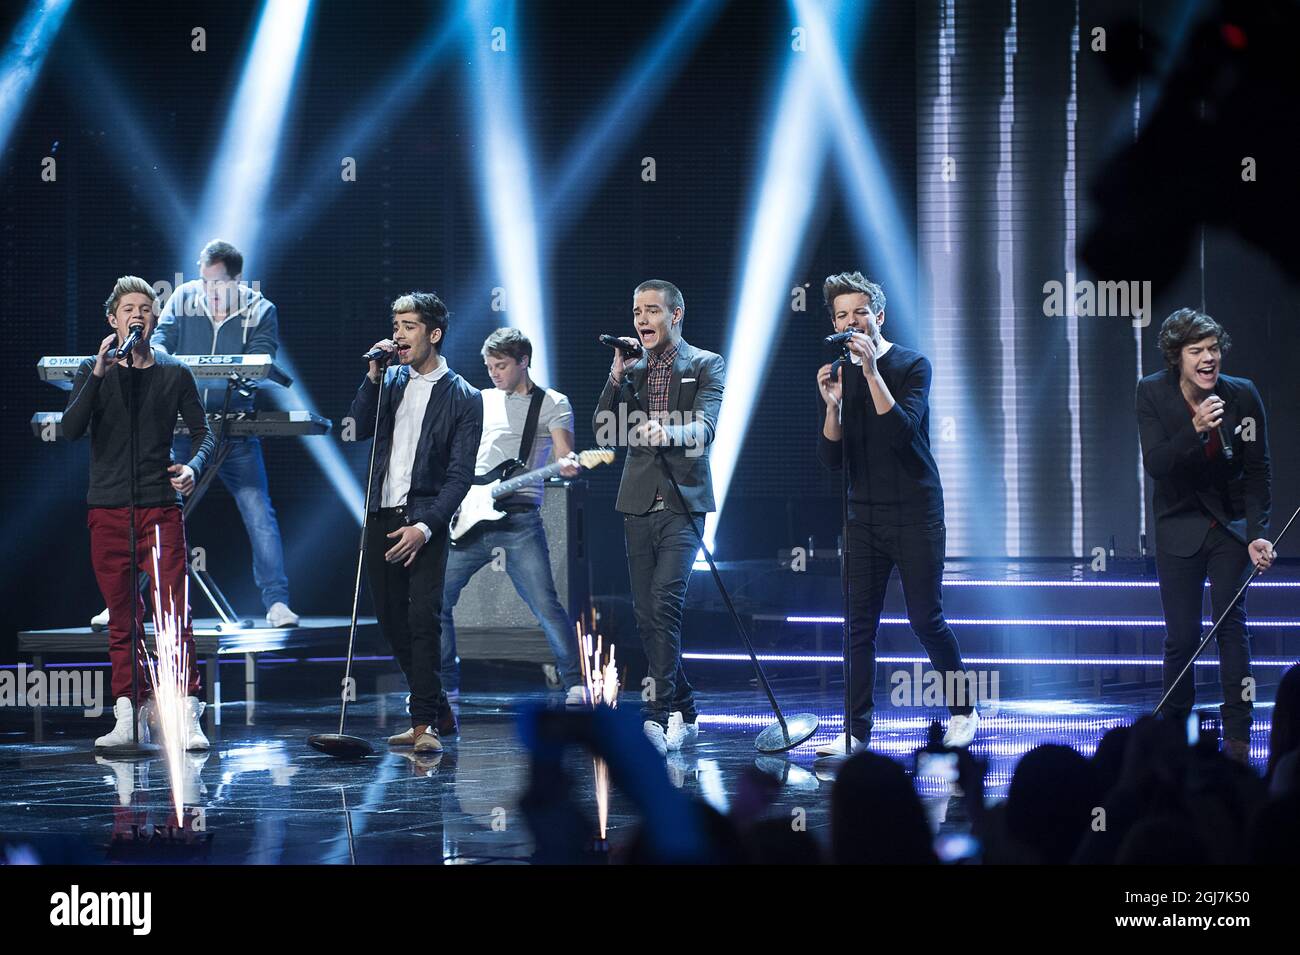 STOCKHOLM 20121102 British-Irish boy band One Direction performs live during the broadcast of the Swedish TV-programme X Factor in Stockholm, Sweden, on Friday, Nov. 02, 2012. Photo Jonas Ekstromer / SCANPIX code 10030 Stock Photo